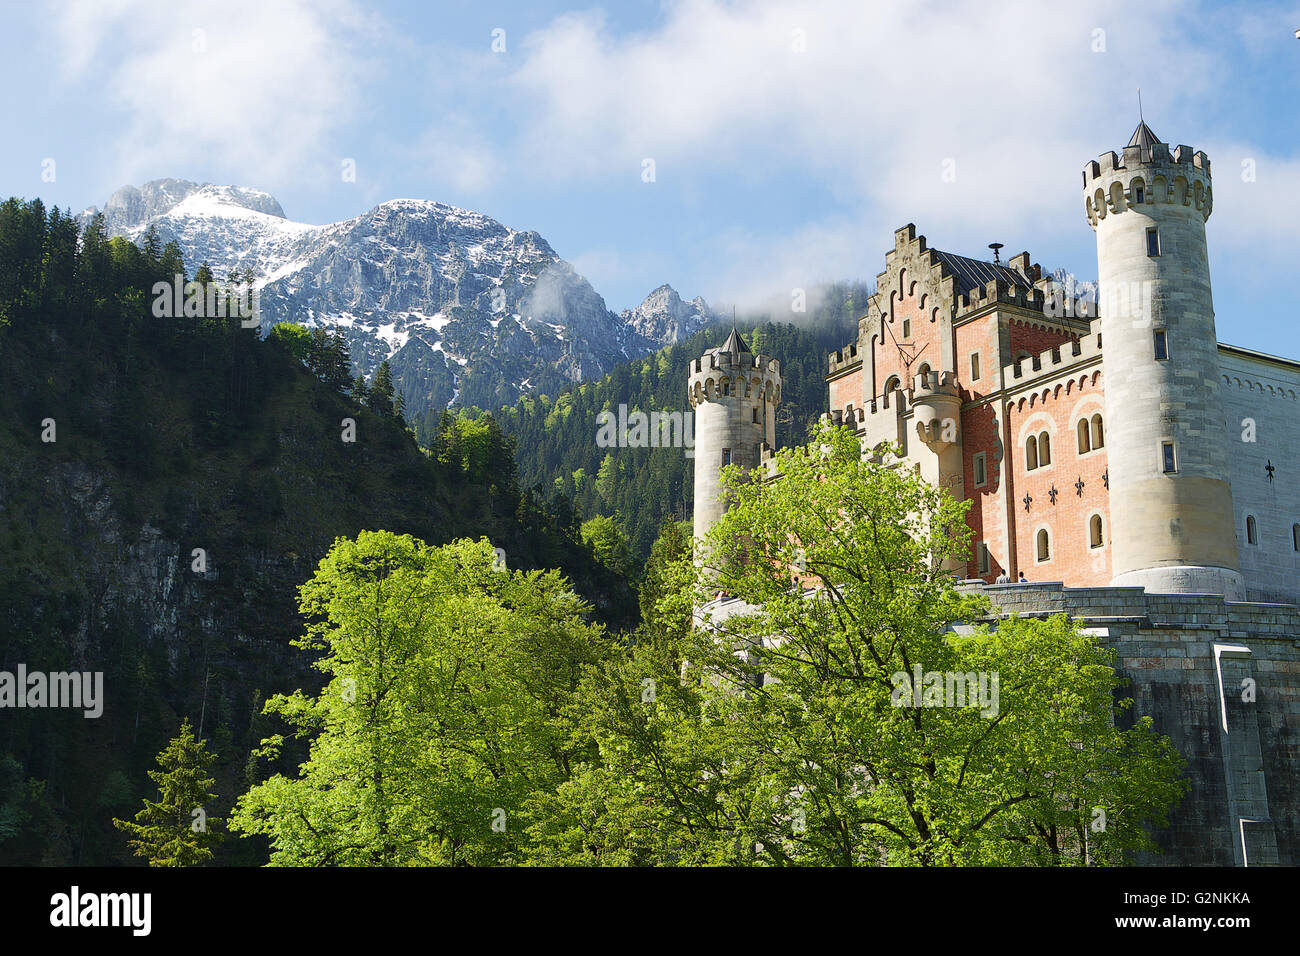 Entrance to Neuschwanstein castle in the mountains. Stock Photo